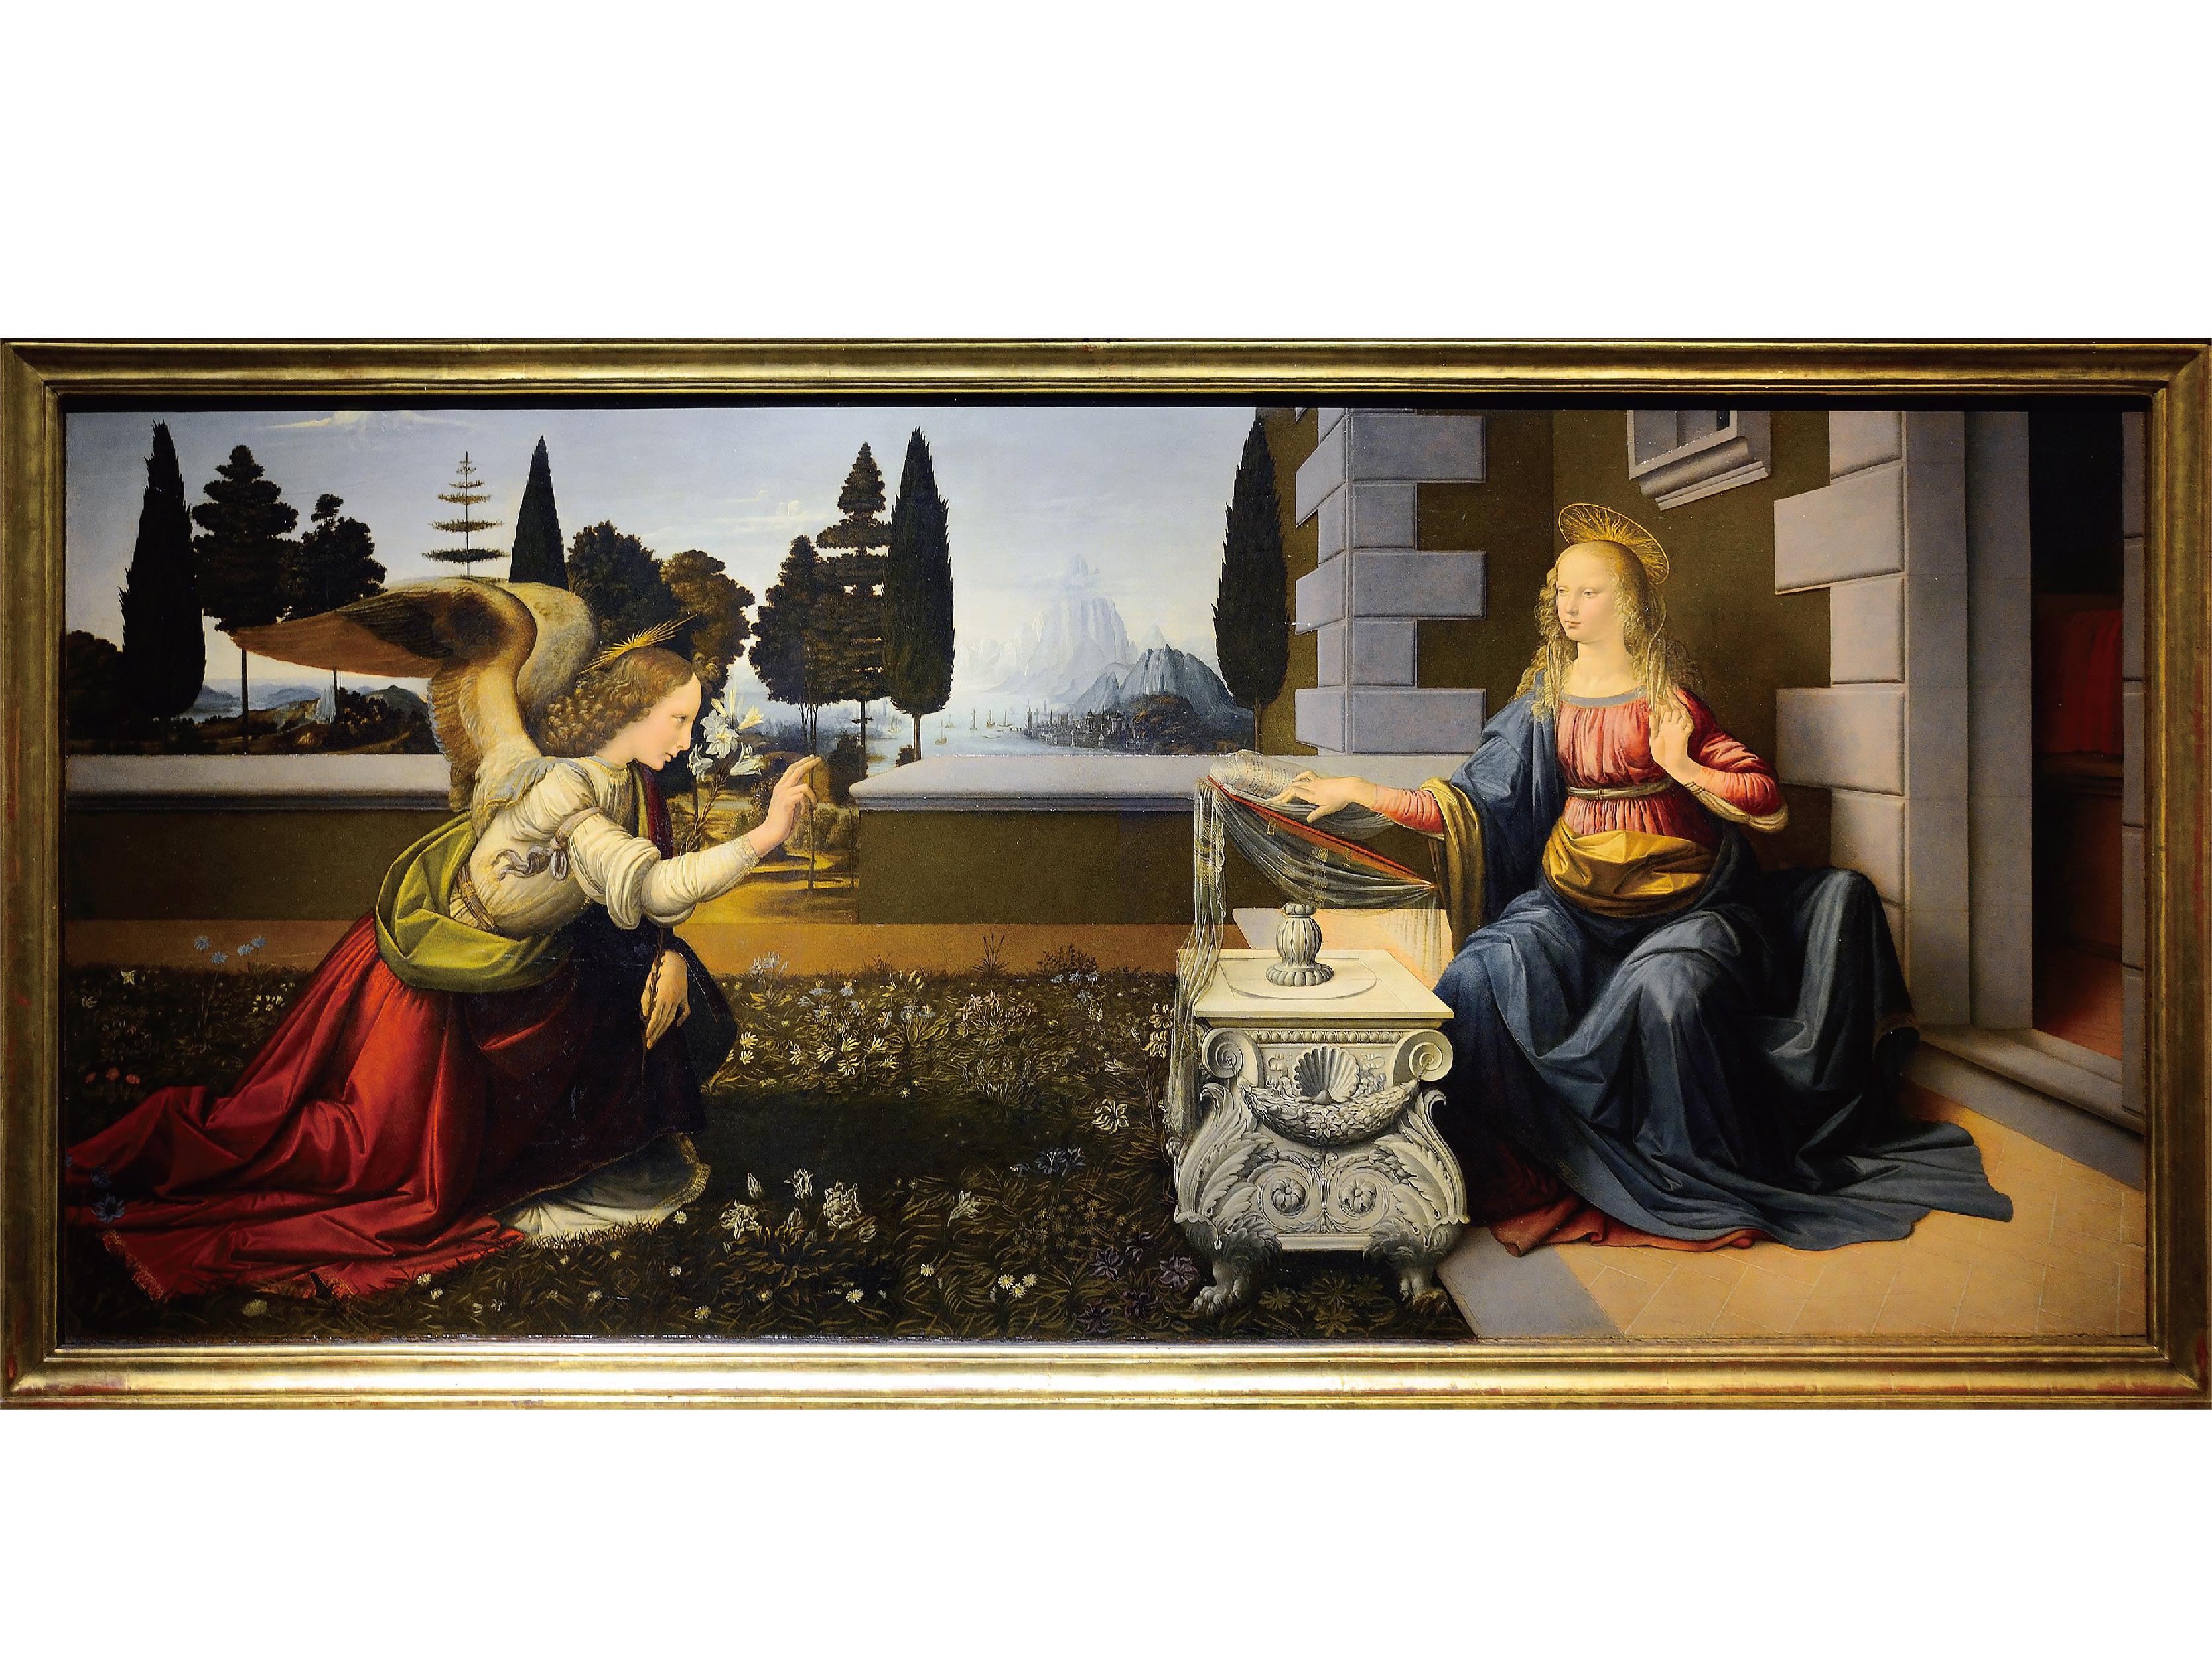 （ Annunciation, 1472, Leonardo da Vinci ）